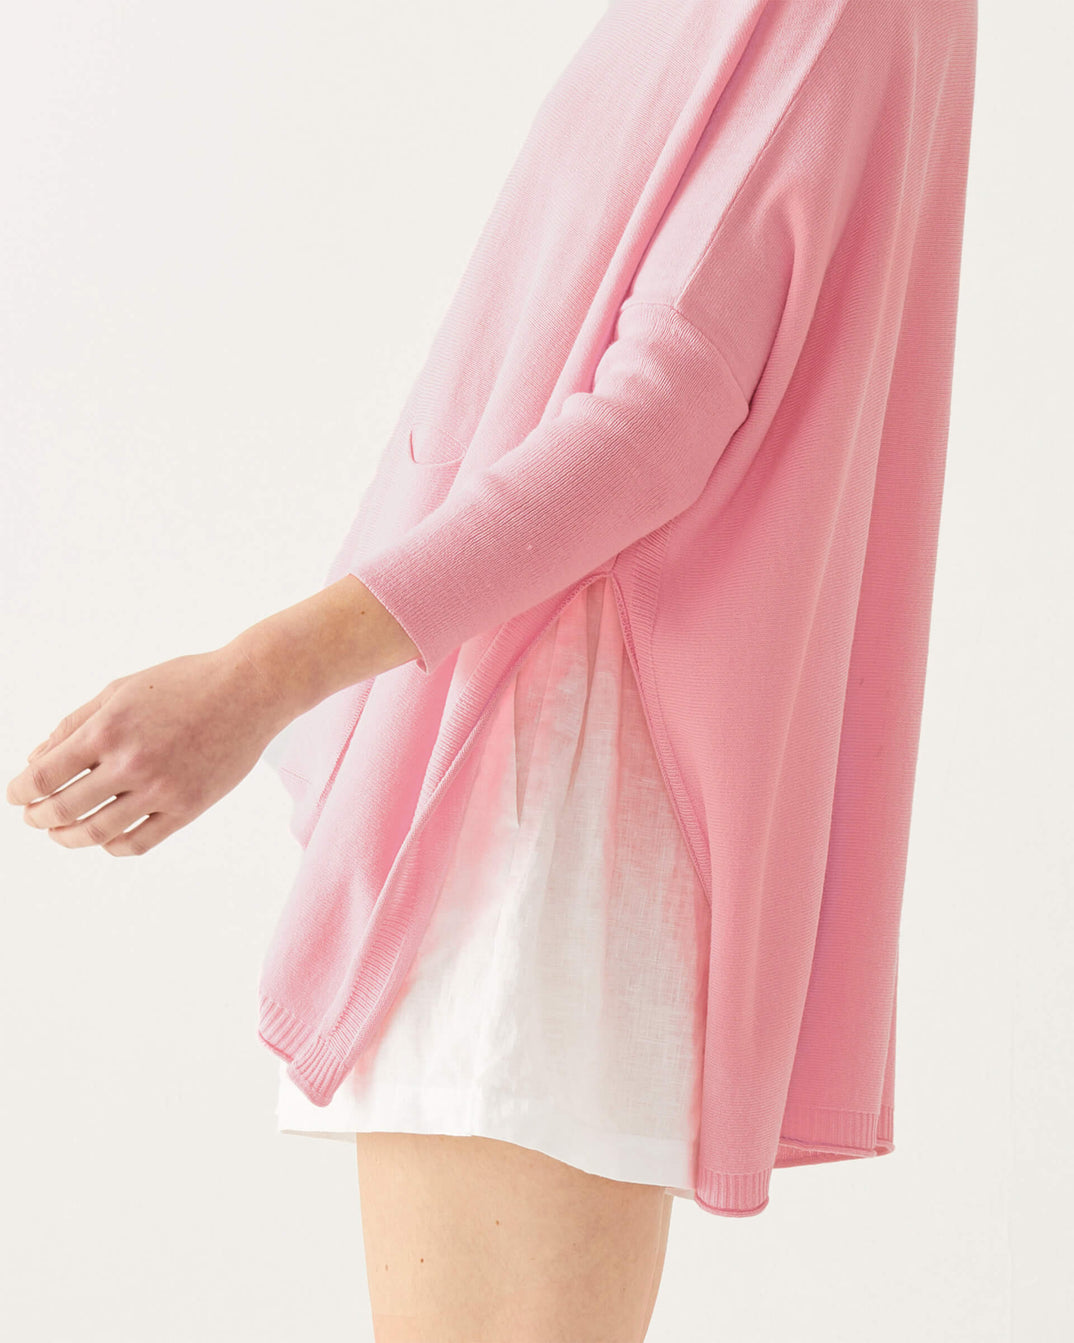 Catalina Sweater - Pink